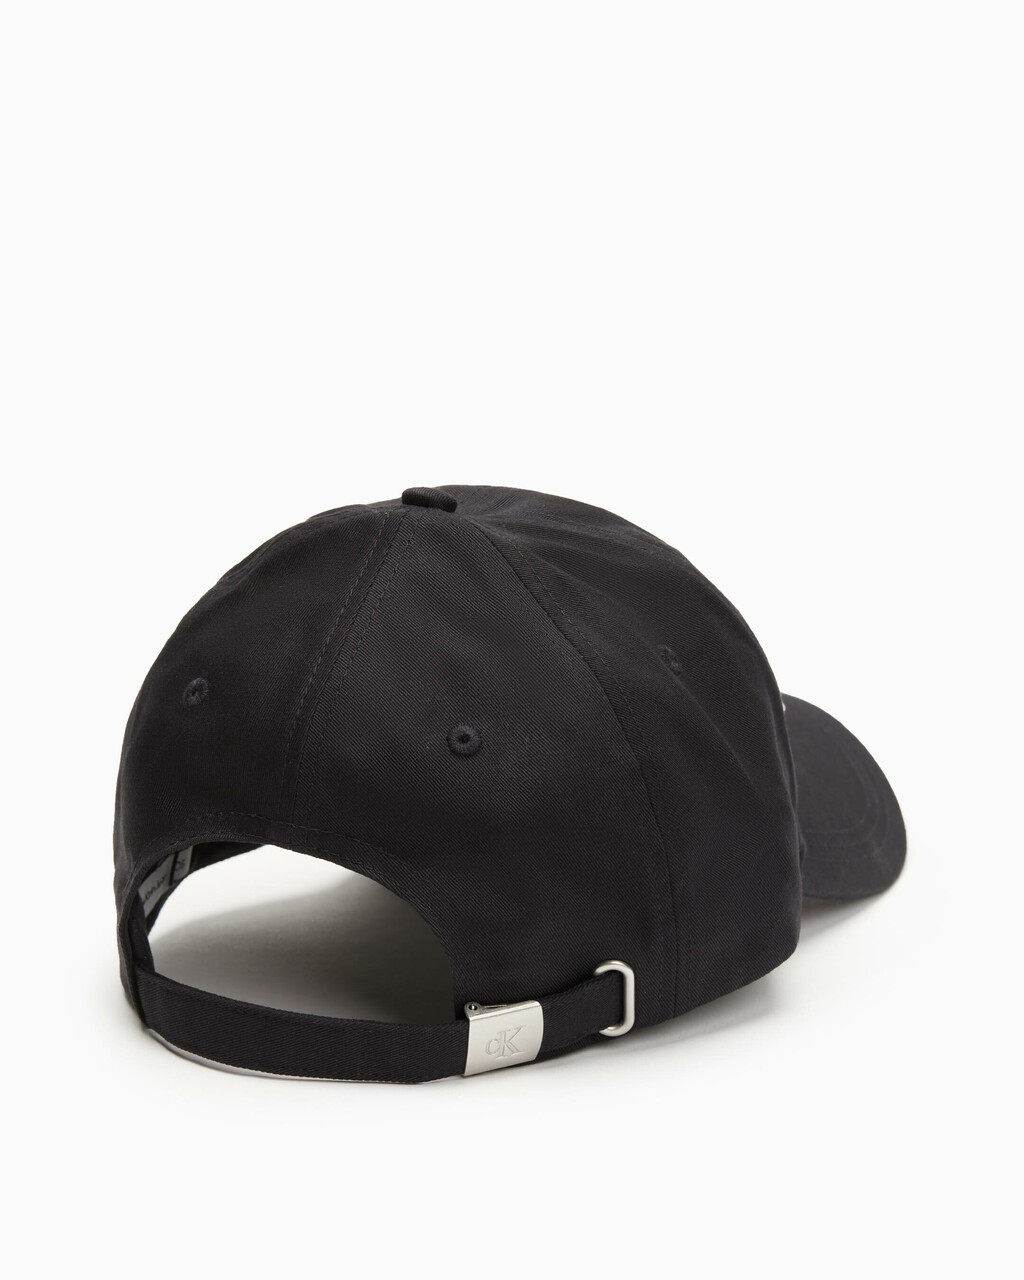 MONOGRAM 棒球帽, BLACK, hi-res